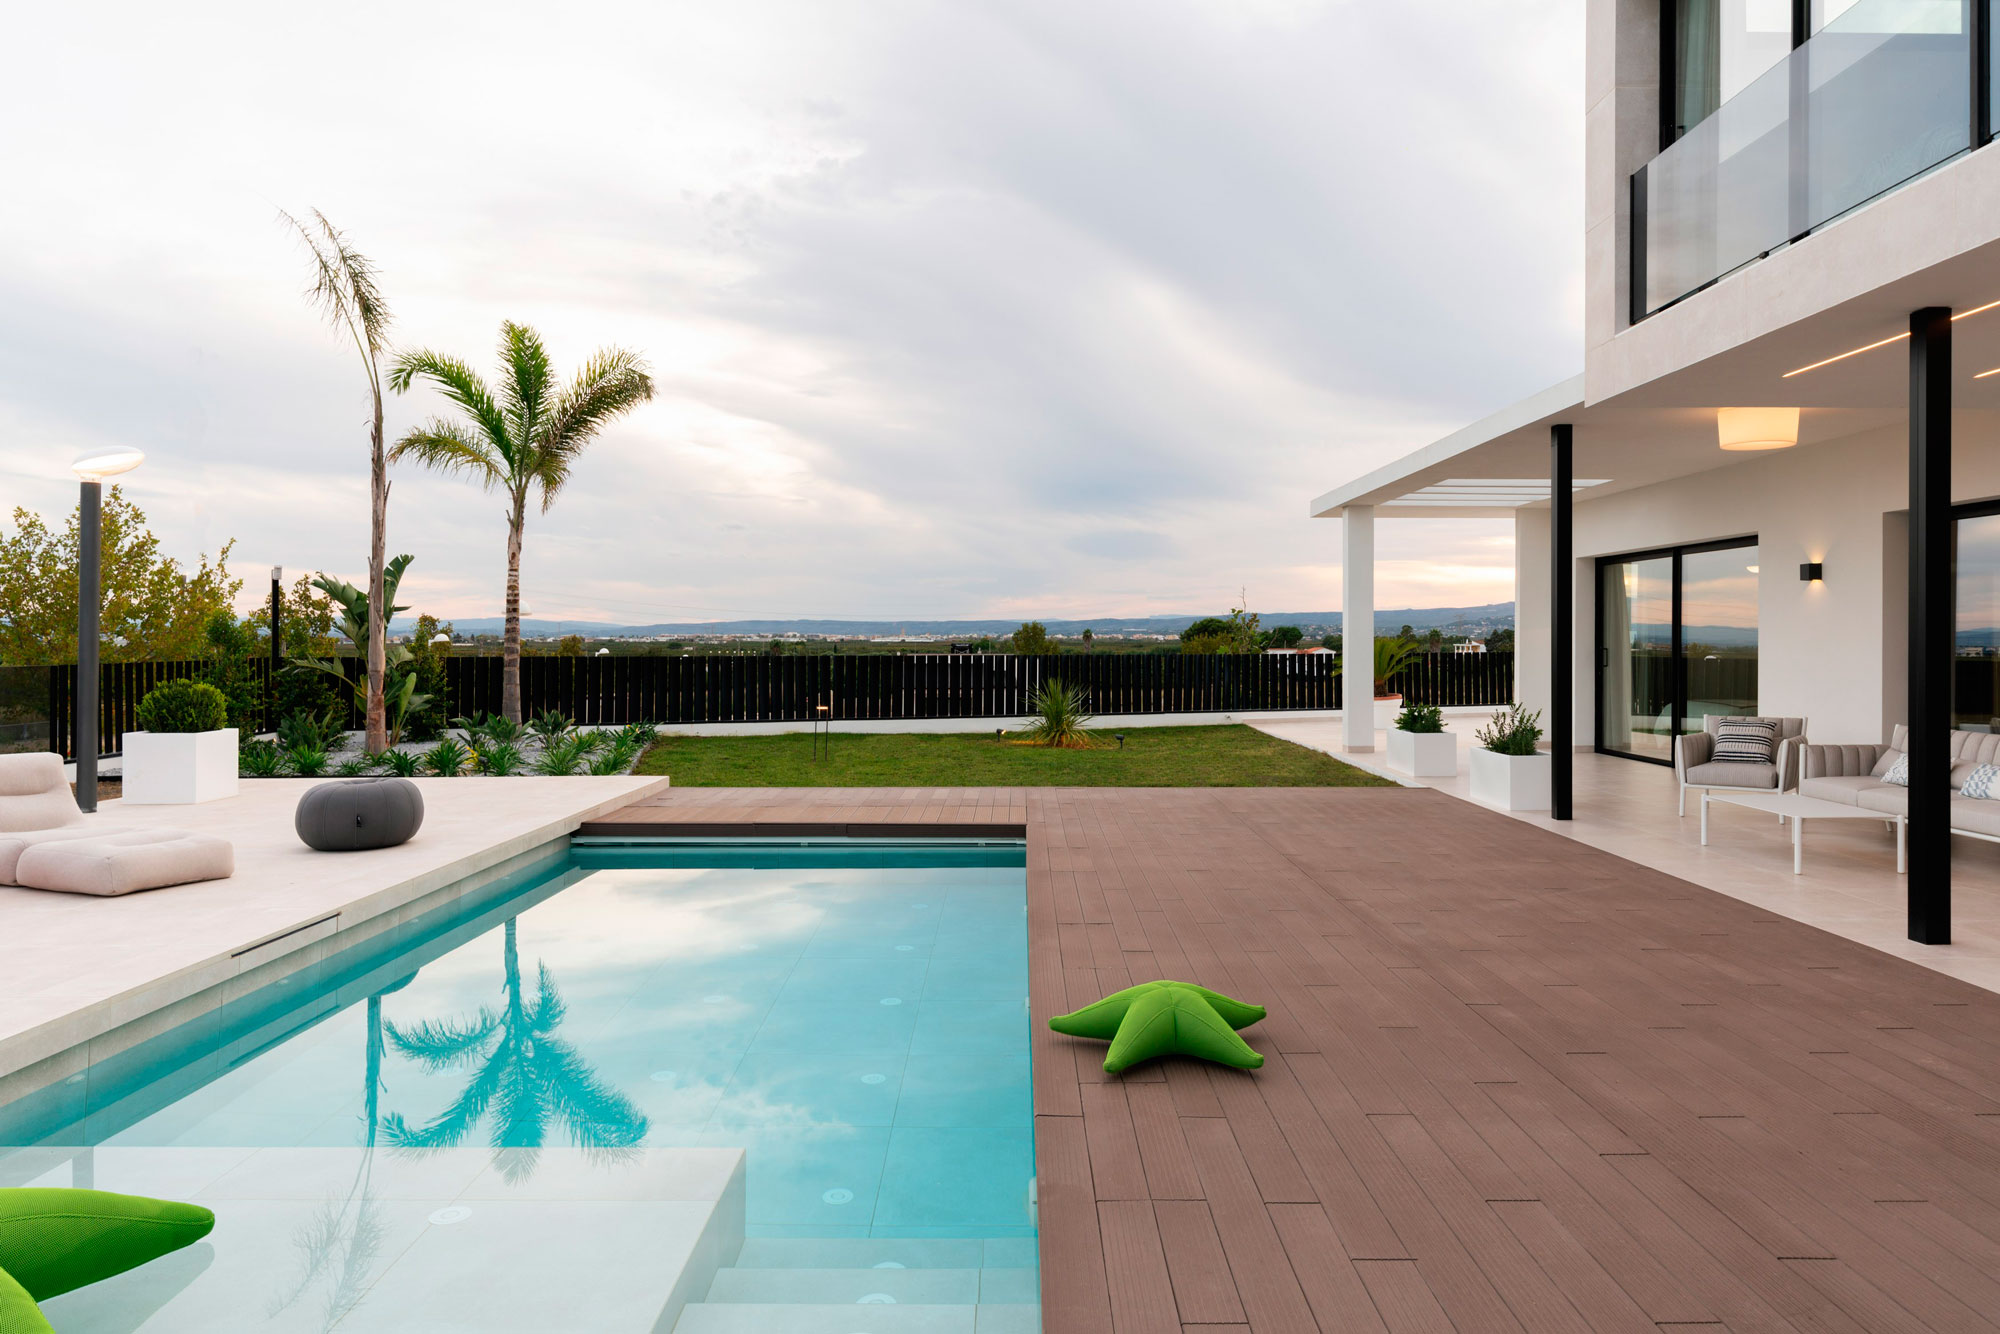 interiorismo arquitectura vivienda unifamiliar carlet diseño chalet mobiliario exterior piscina porche terraza